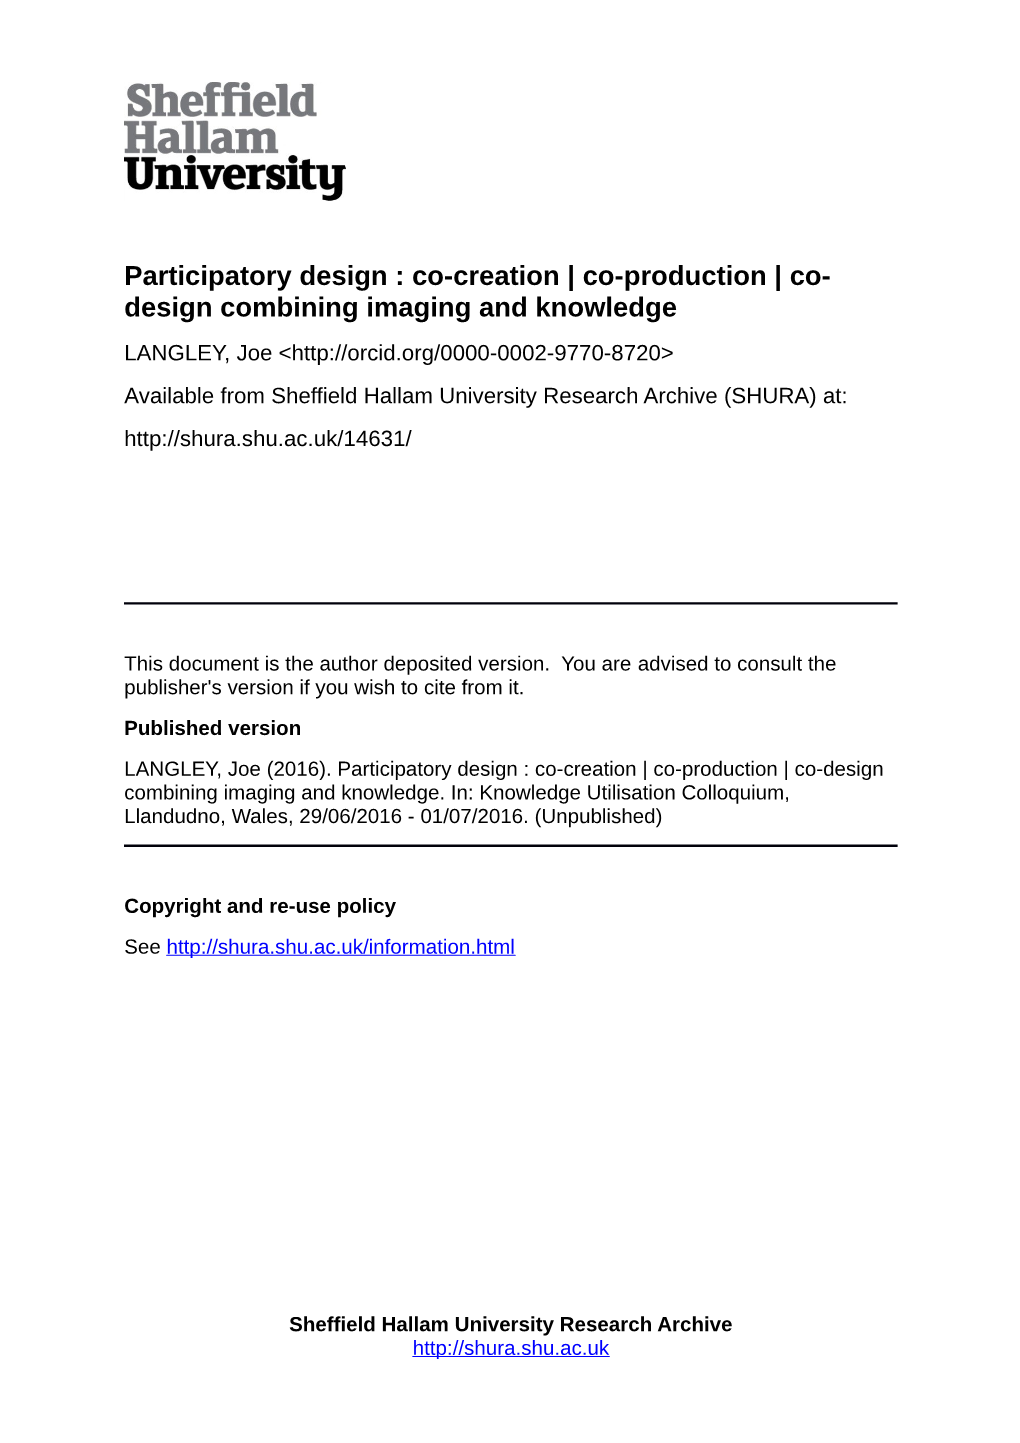 Participatory Design : Co-Creation